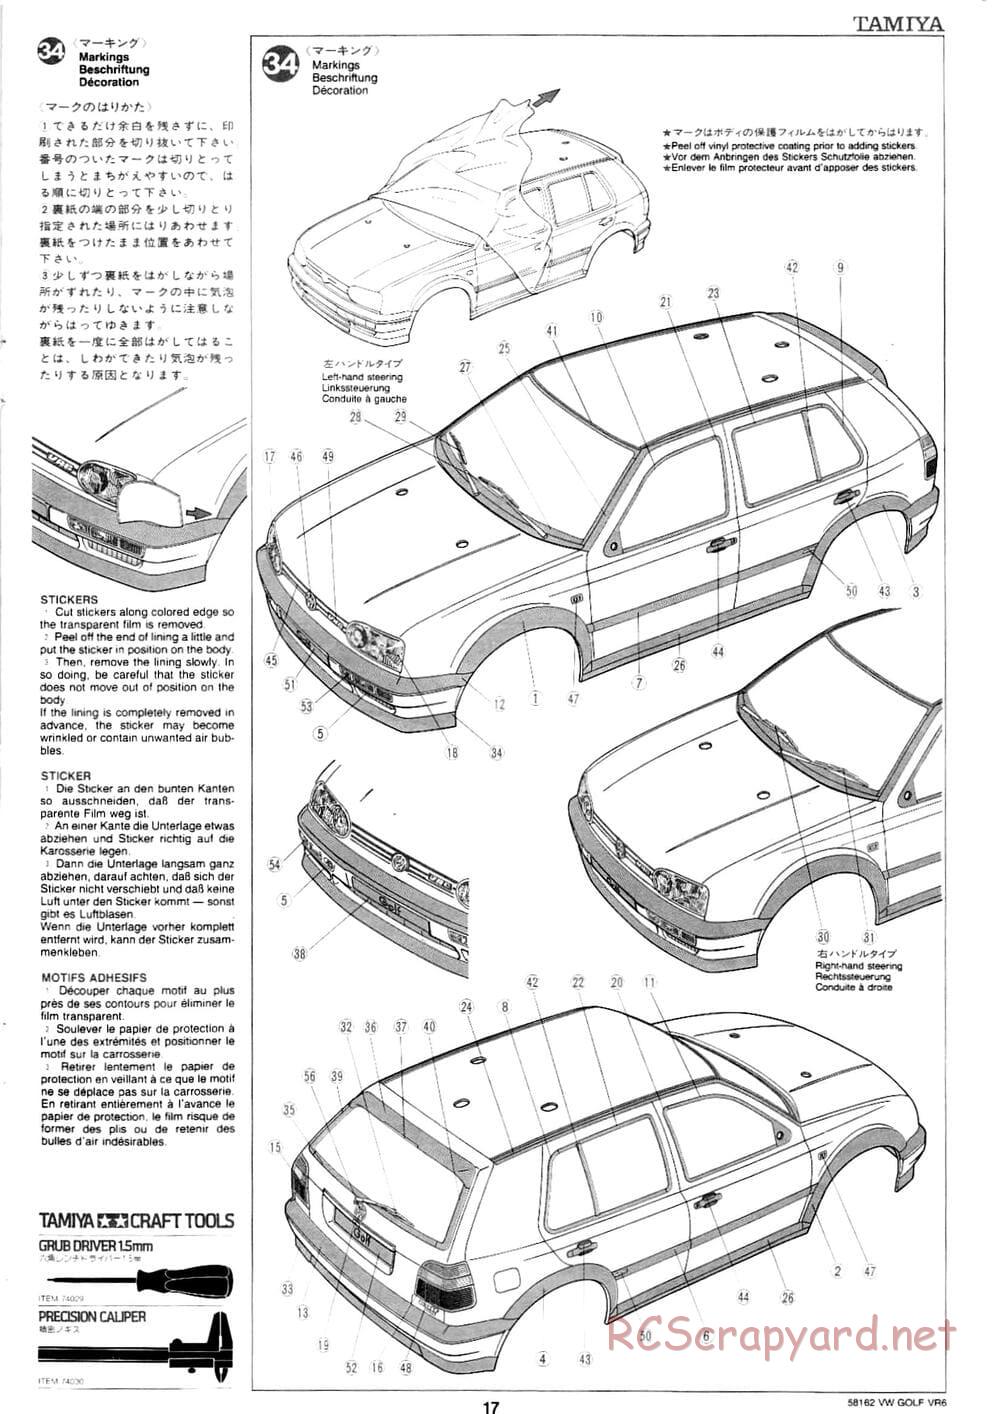 Tamiya - Volkswagen Golf VR6 - FF-01 Chassis - Manual - Page 17